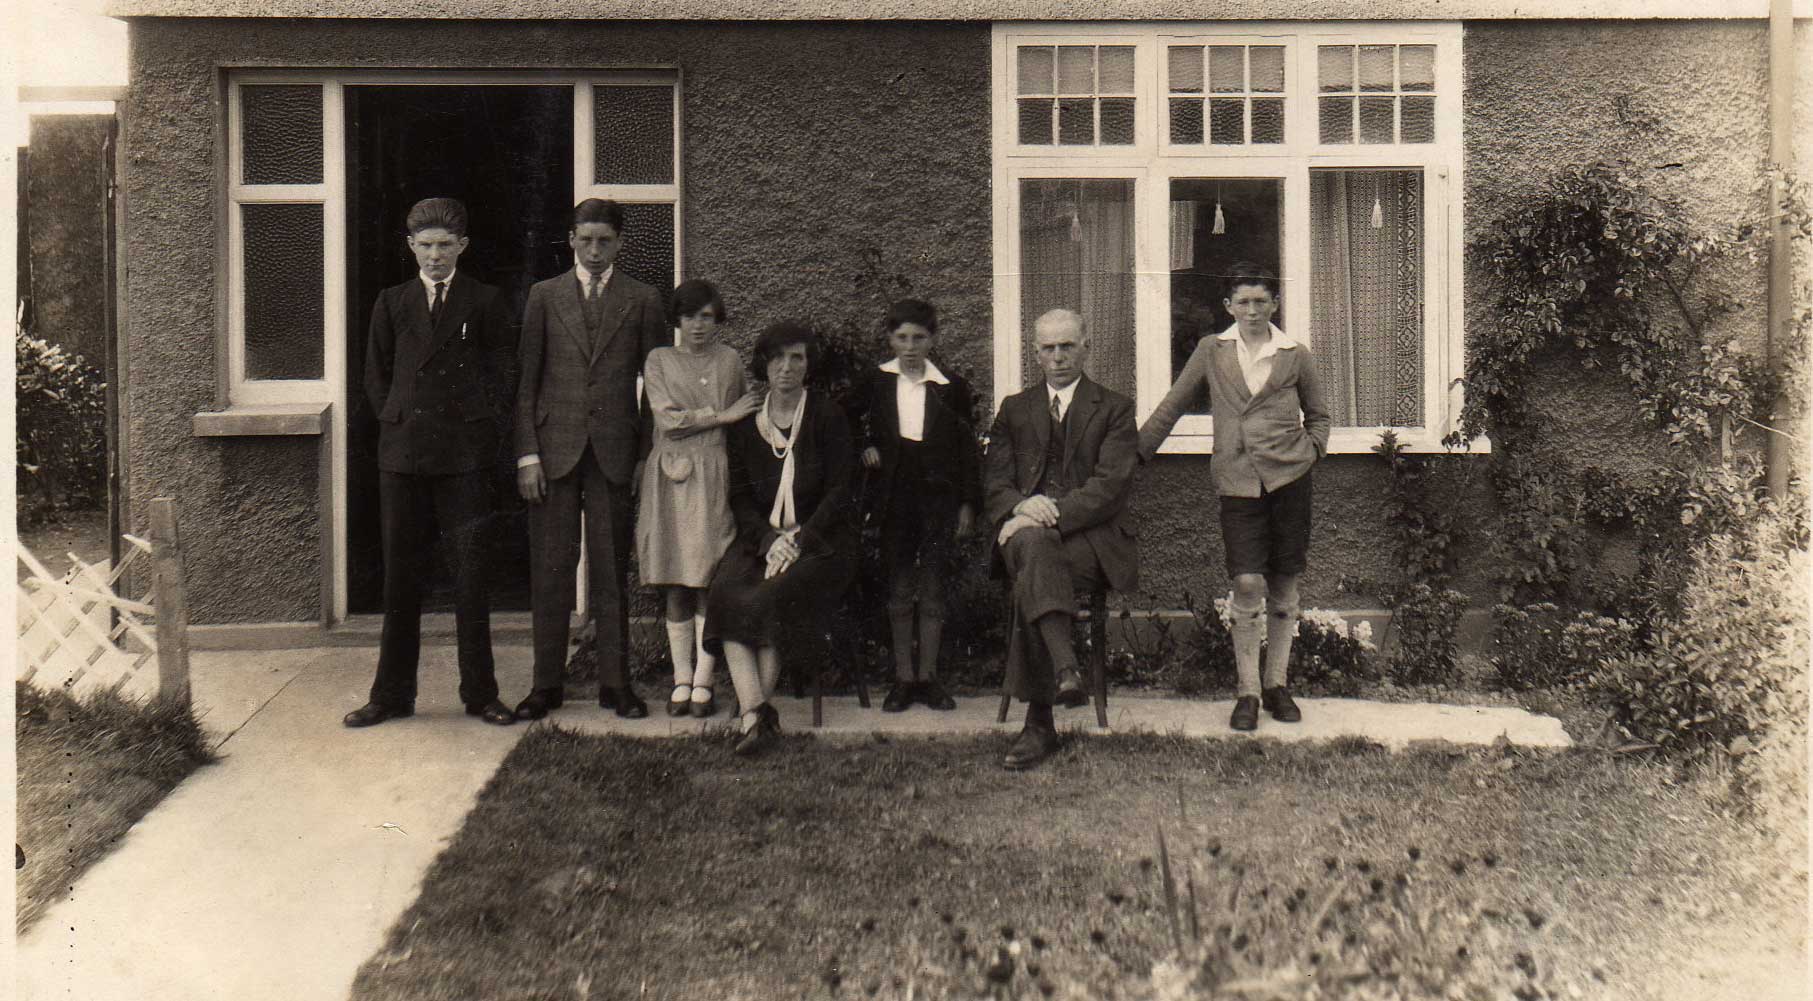 O'Brien family of Killuran, Shelbourne Avenue, Limerick (c. 1929-1930). Left to right - Kennedy, Bartholomew, Mary, Molly, Thomas Jnr., Thomas Snr. and Matthew